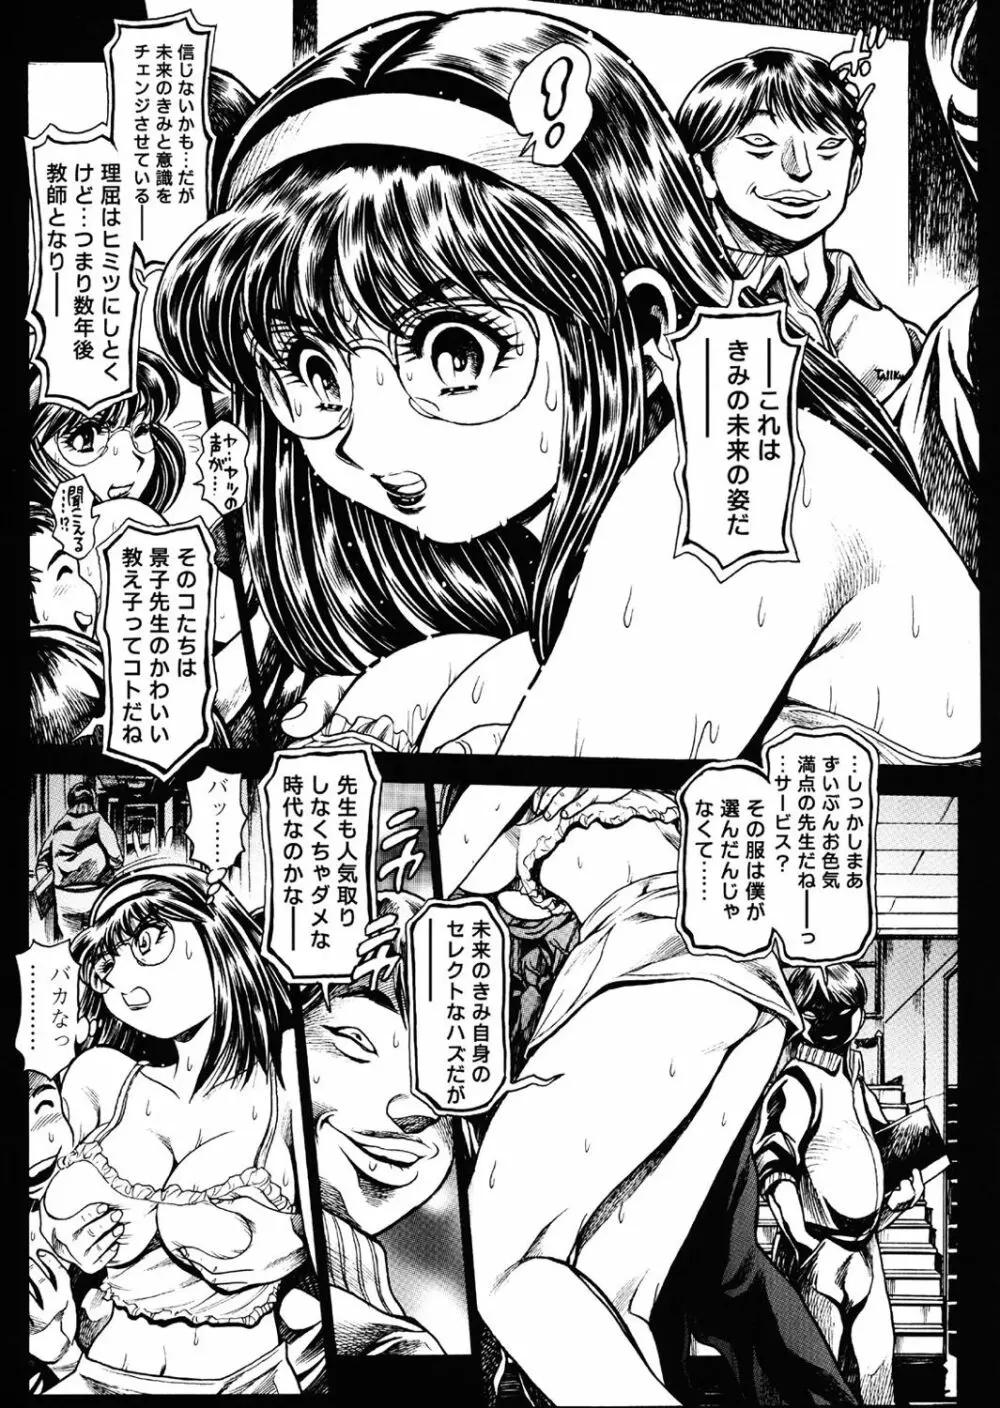 [Chataro] Nami SOS! 5 Girls – Before – Keiko 004-006 [JAP].cbr 42ページ